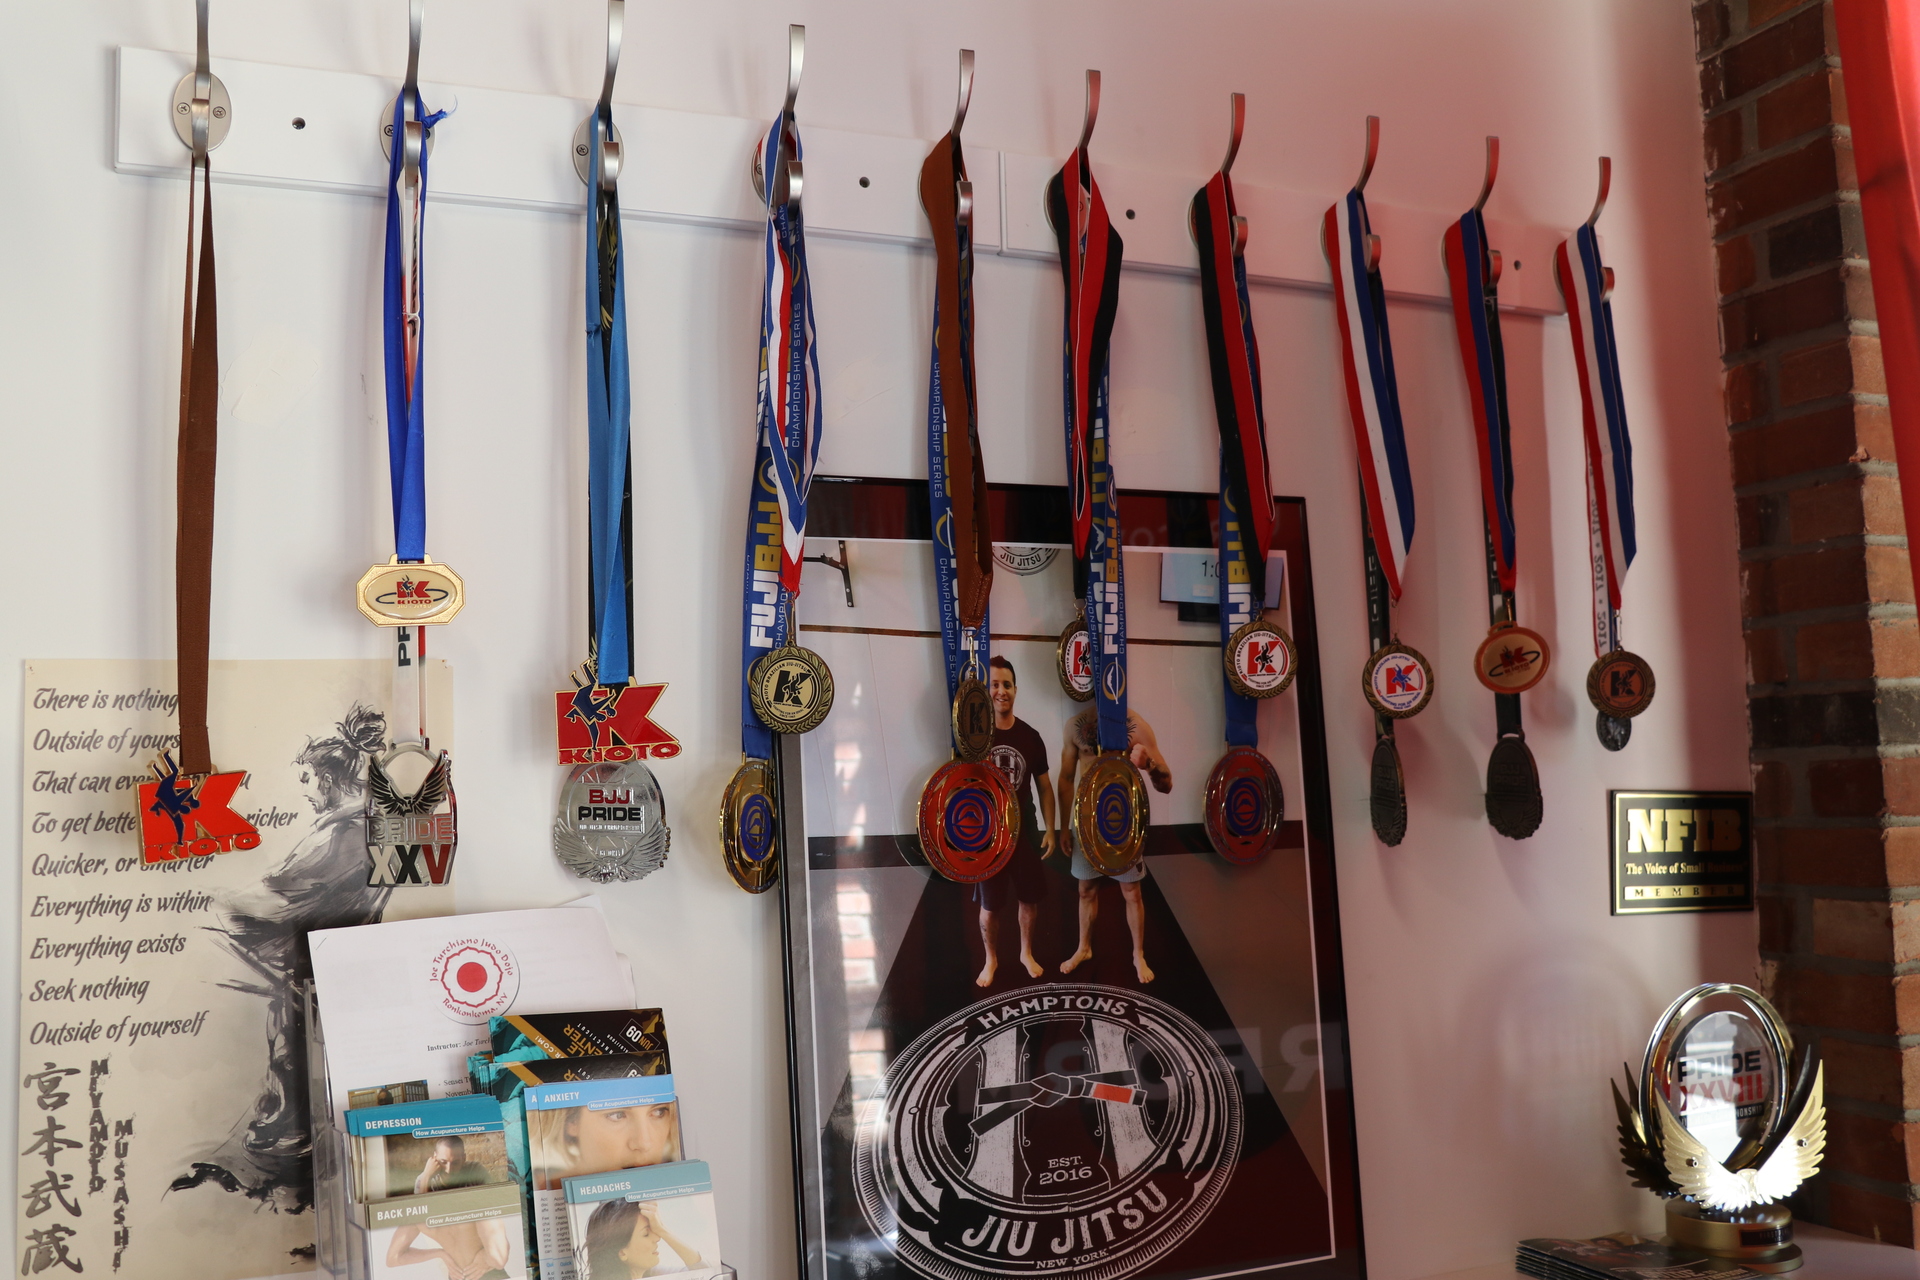 Greg's medals hanging up in Hamptons Jiu Jitsu.